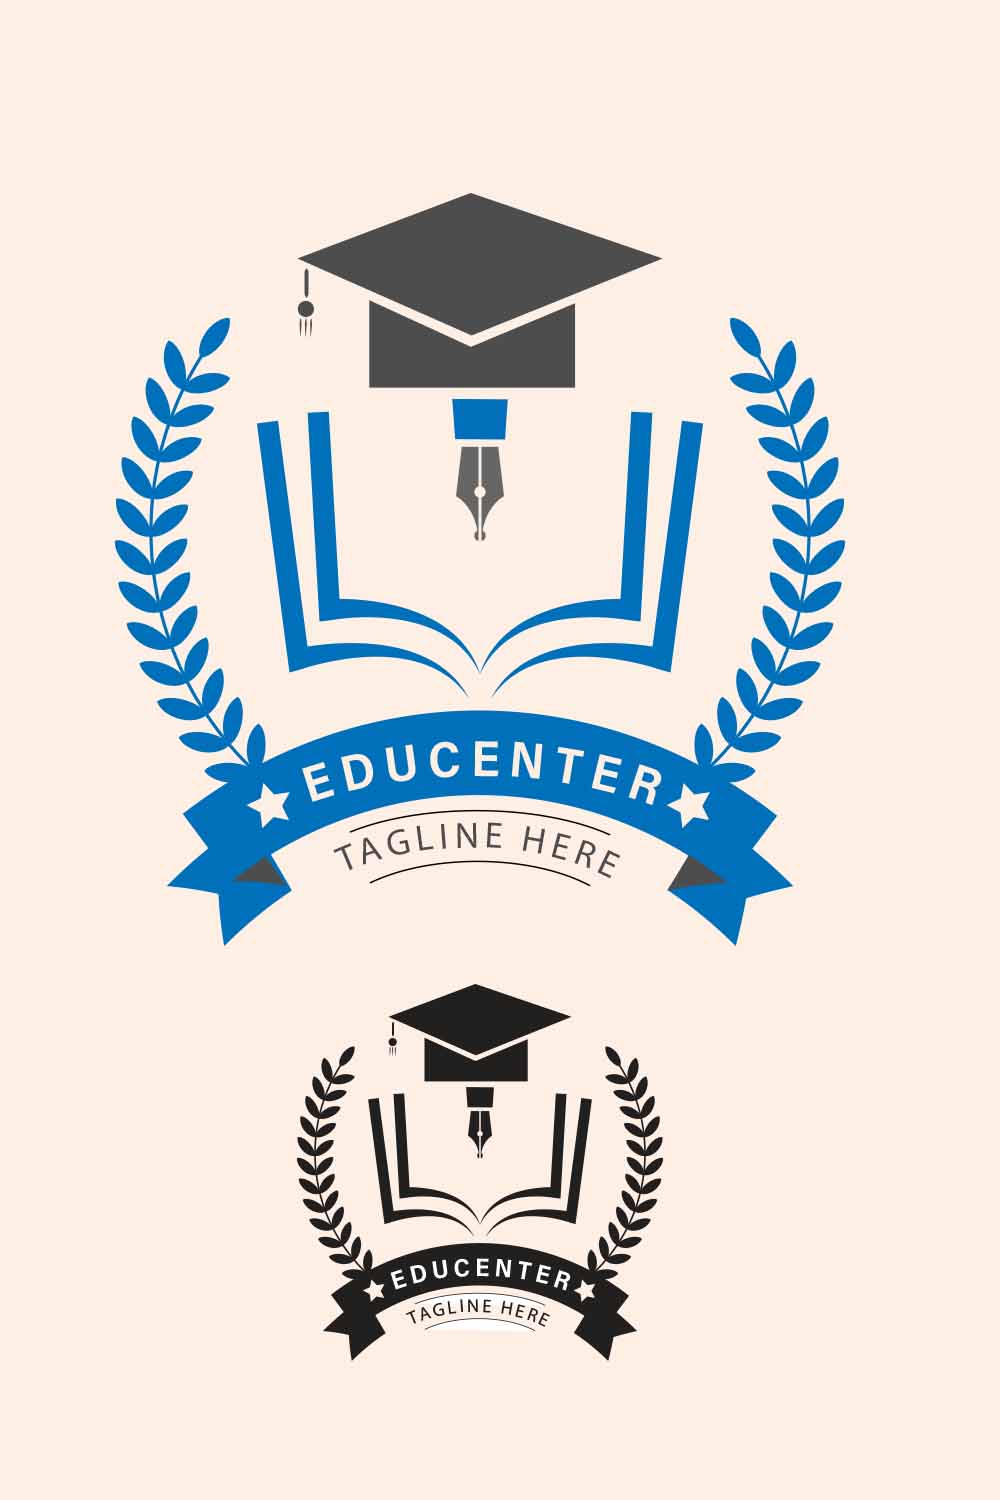 Educenter School, University, College Logo Design pinterest image.